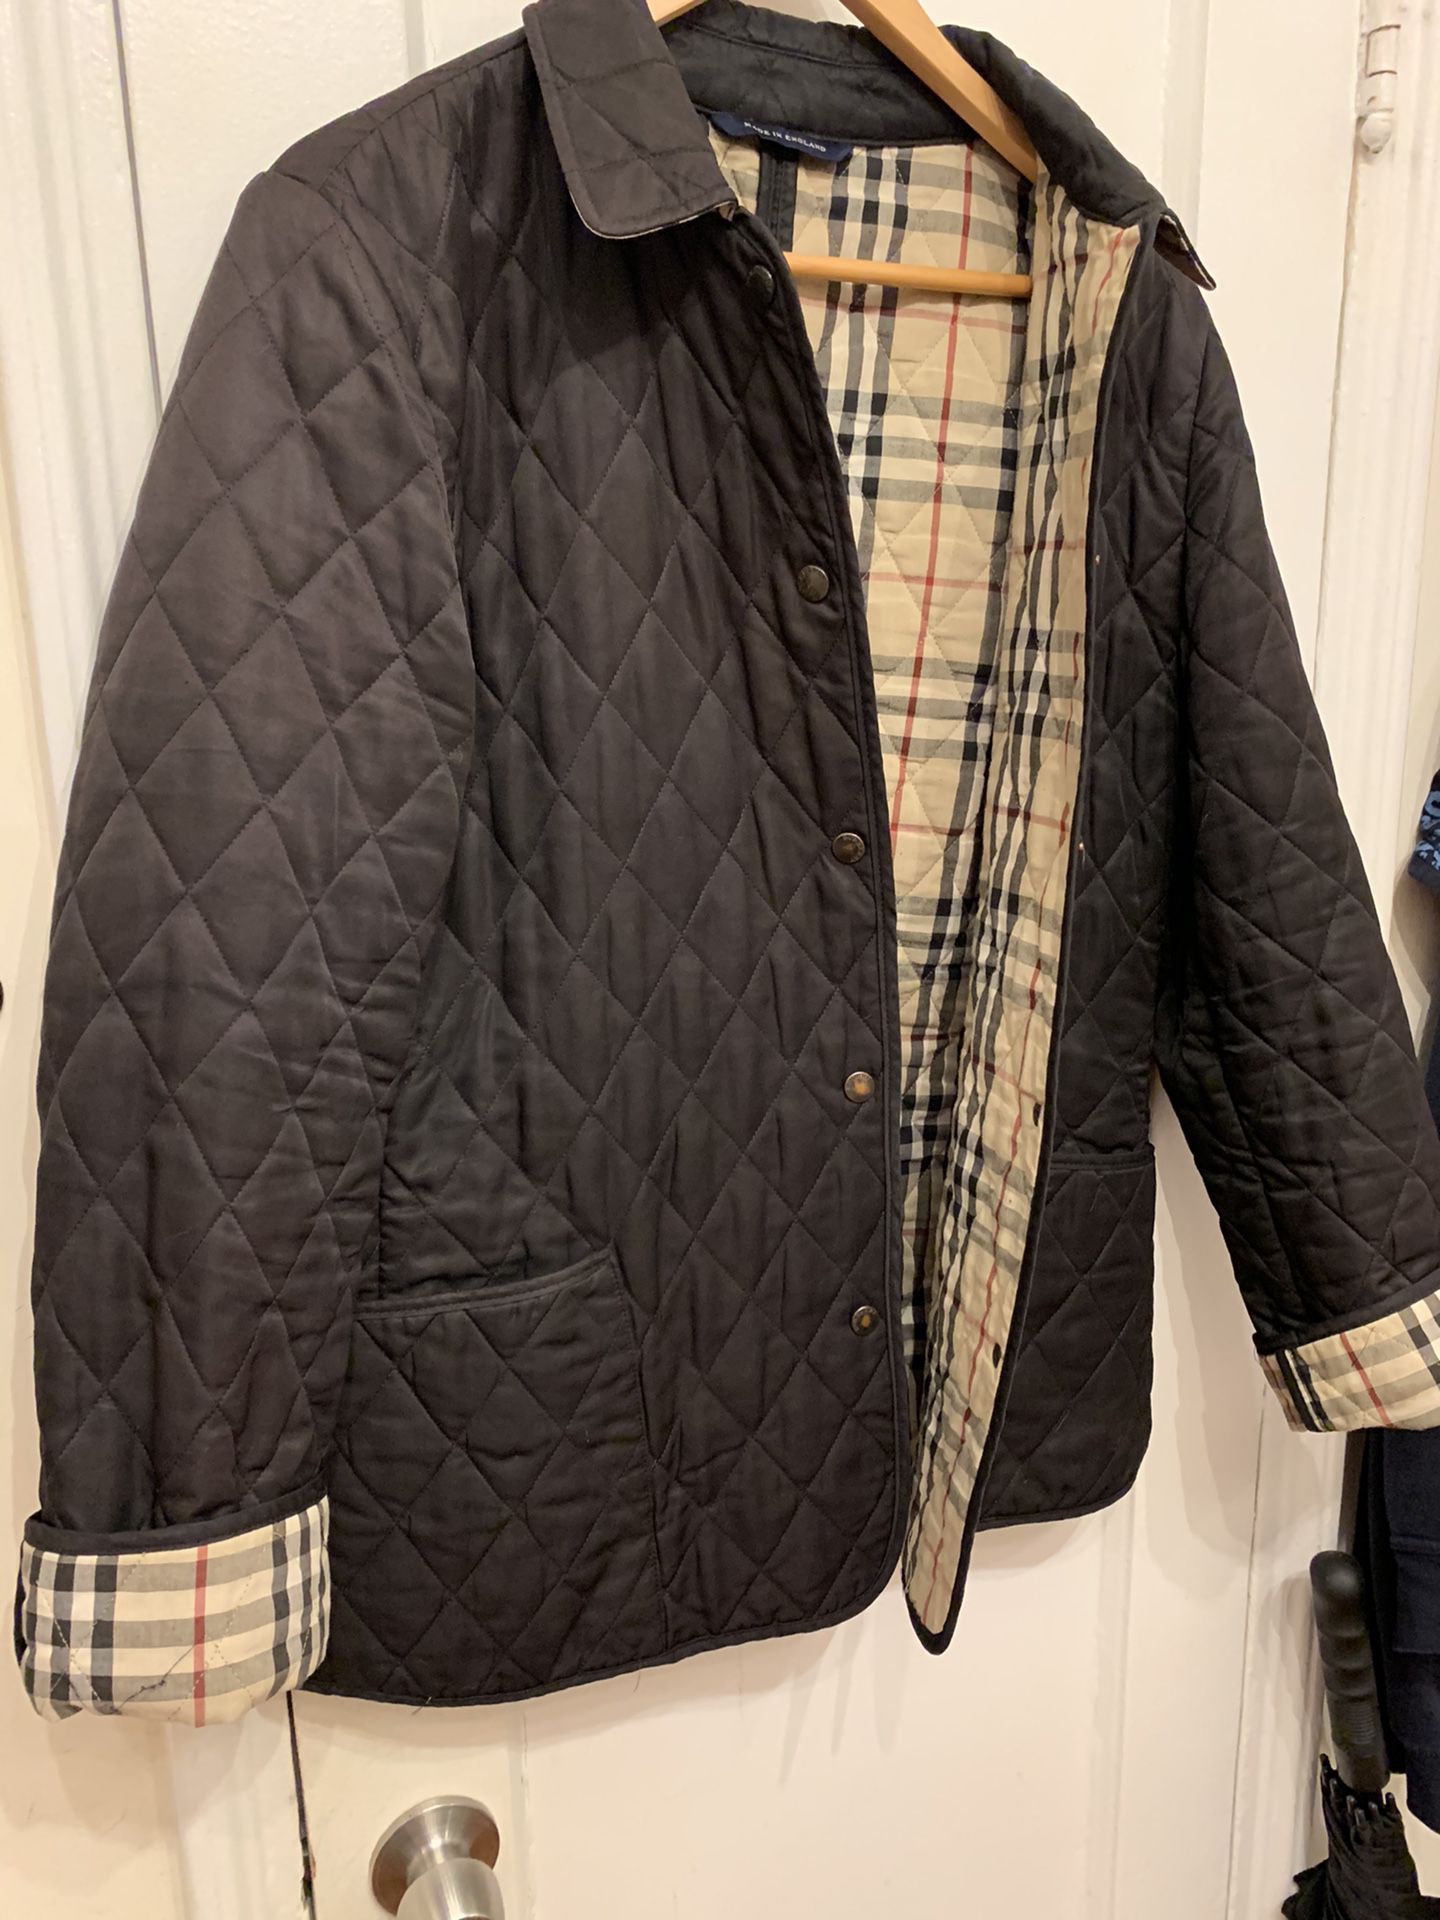 Burberry fall jacket Medium